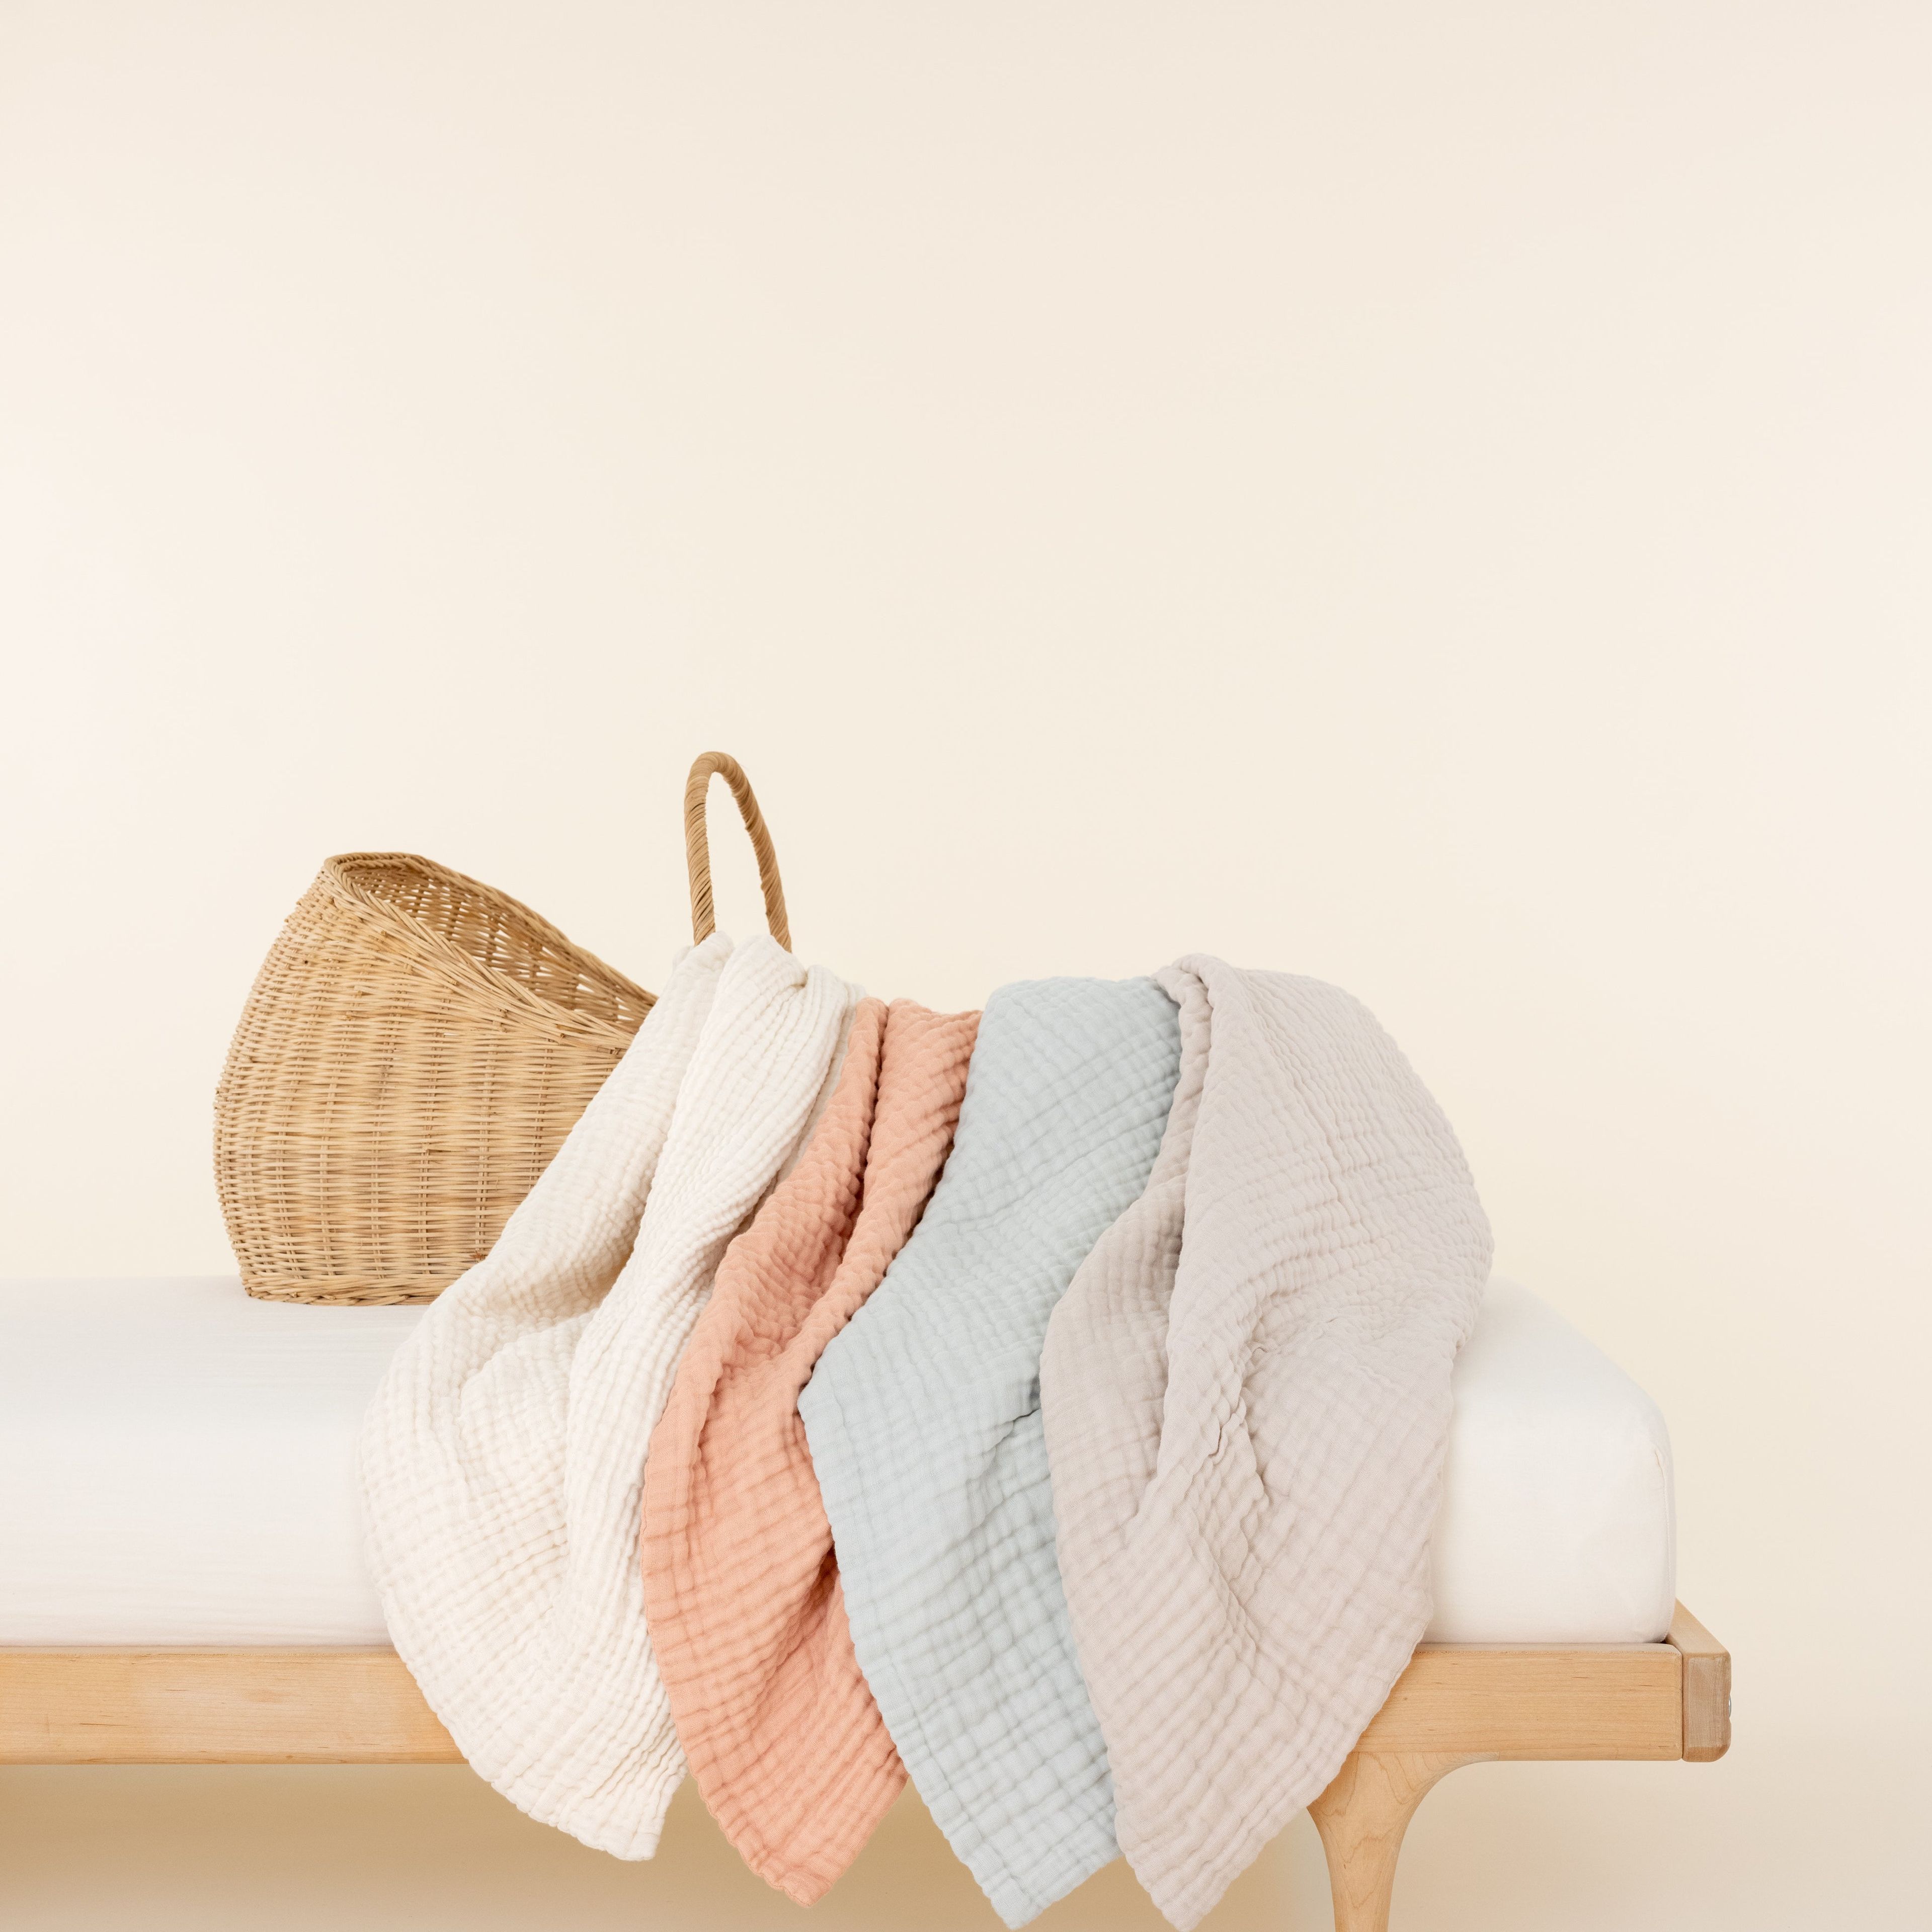 basic burp cloth + blanket set (4 colors)